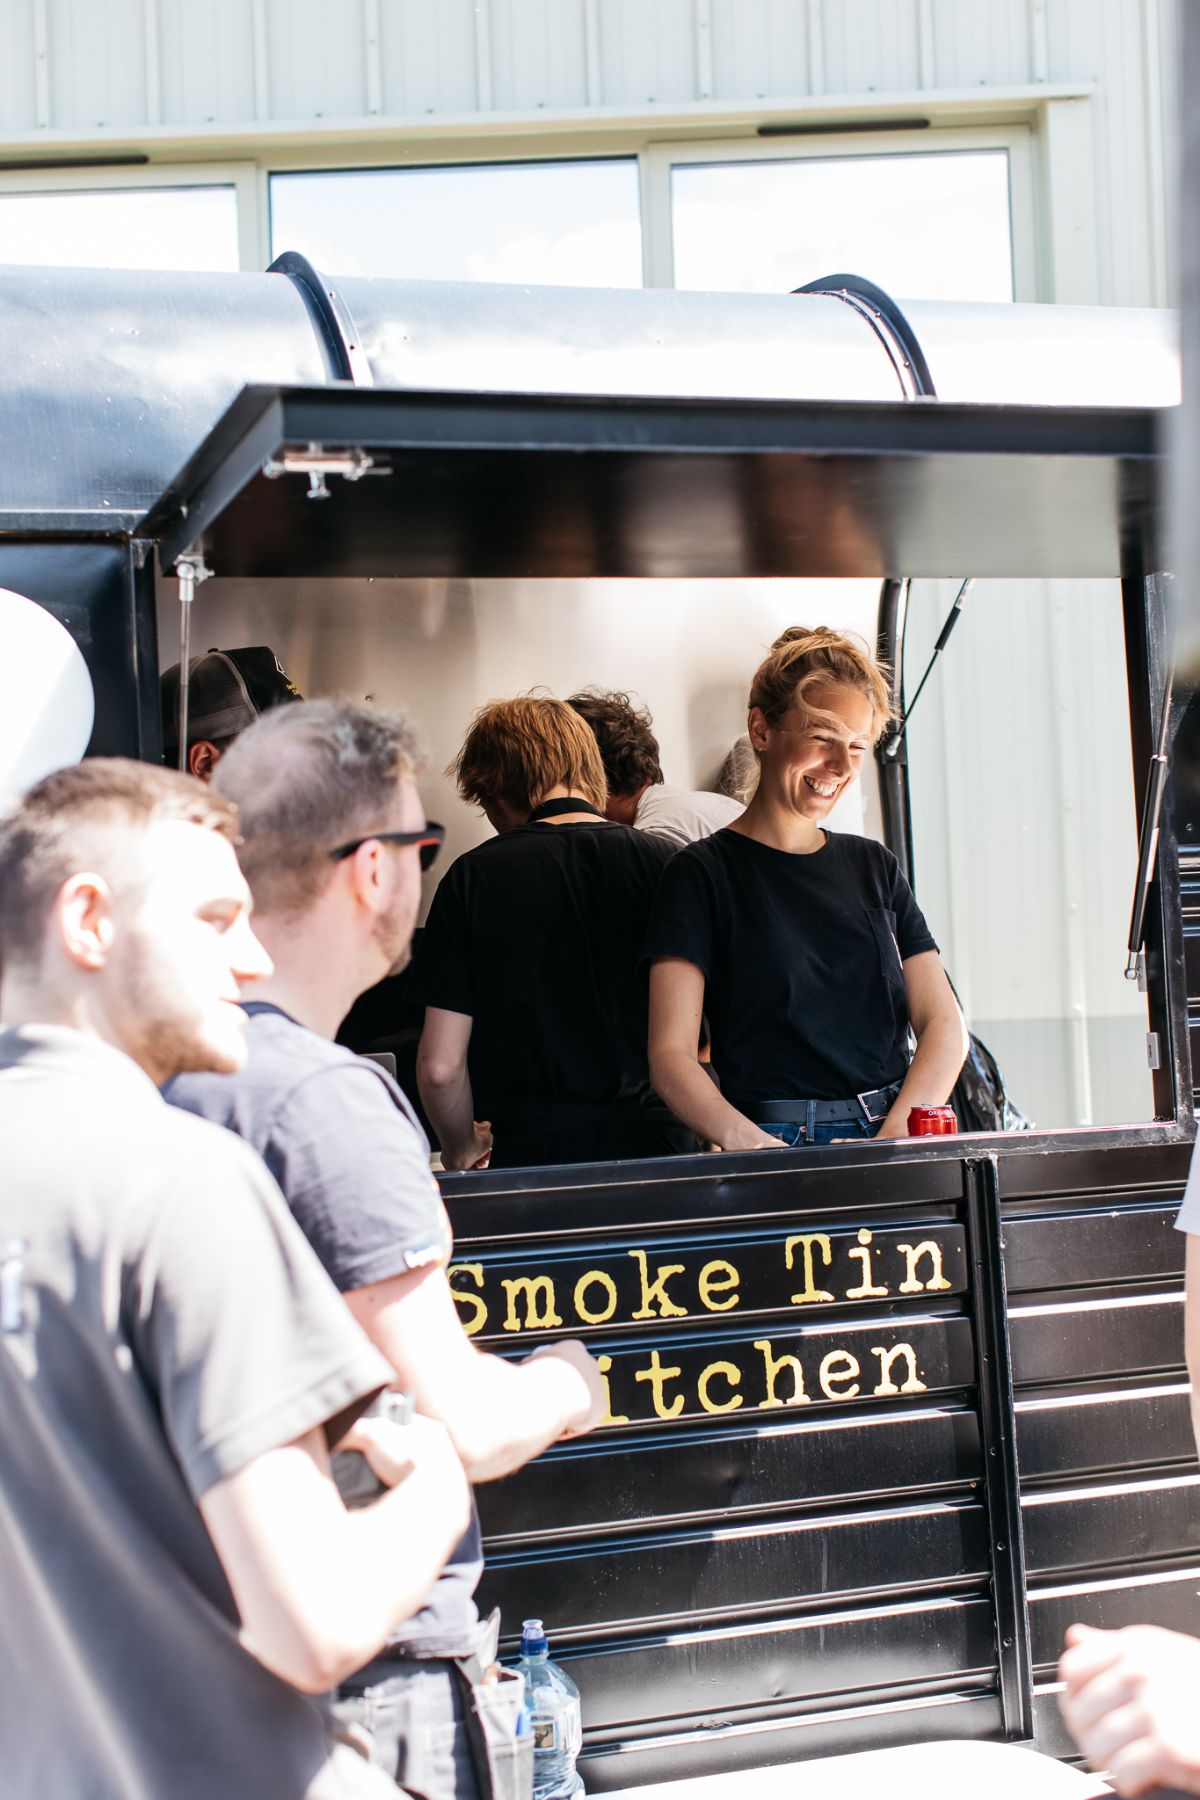 Smoke Tin Kitchen-Image-25